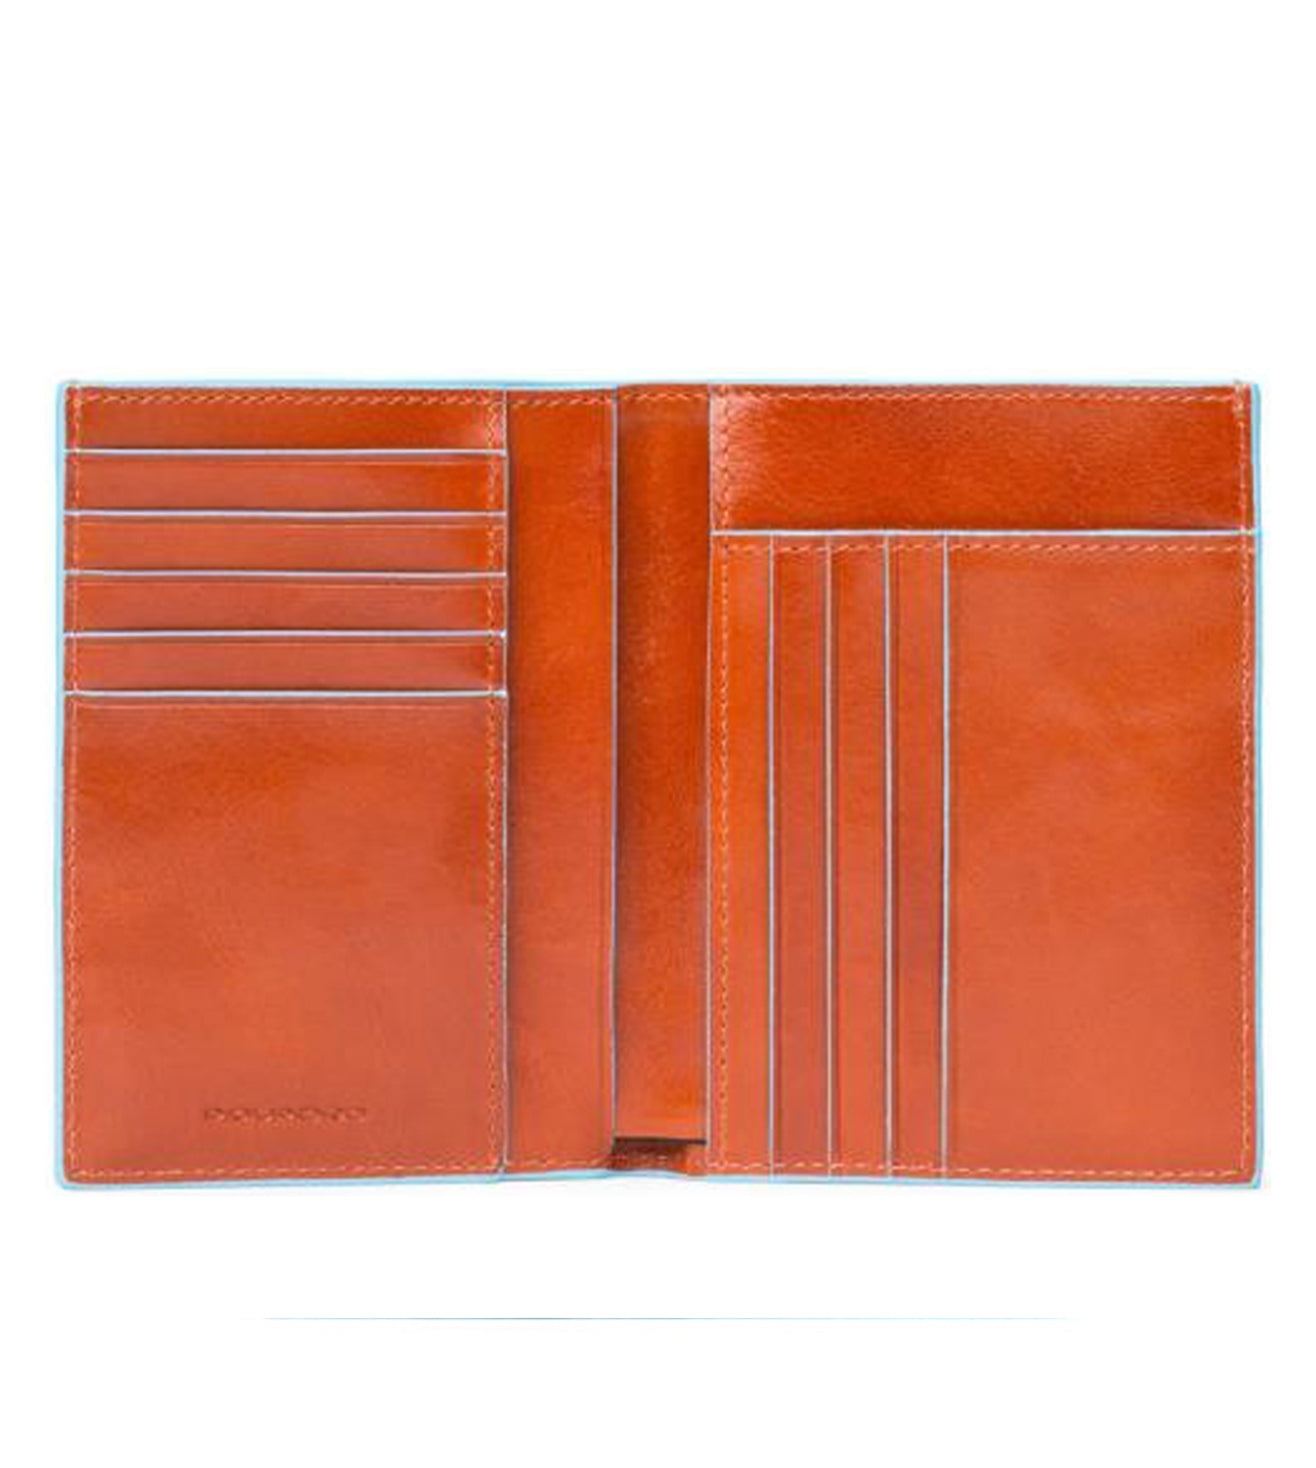 Piquadro Blue Square Men's Orange Wallet